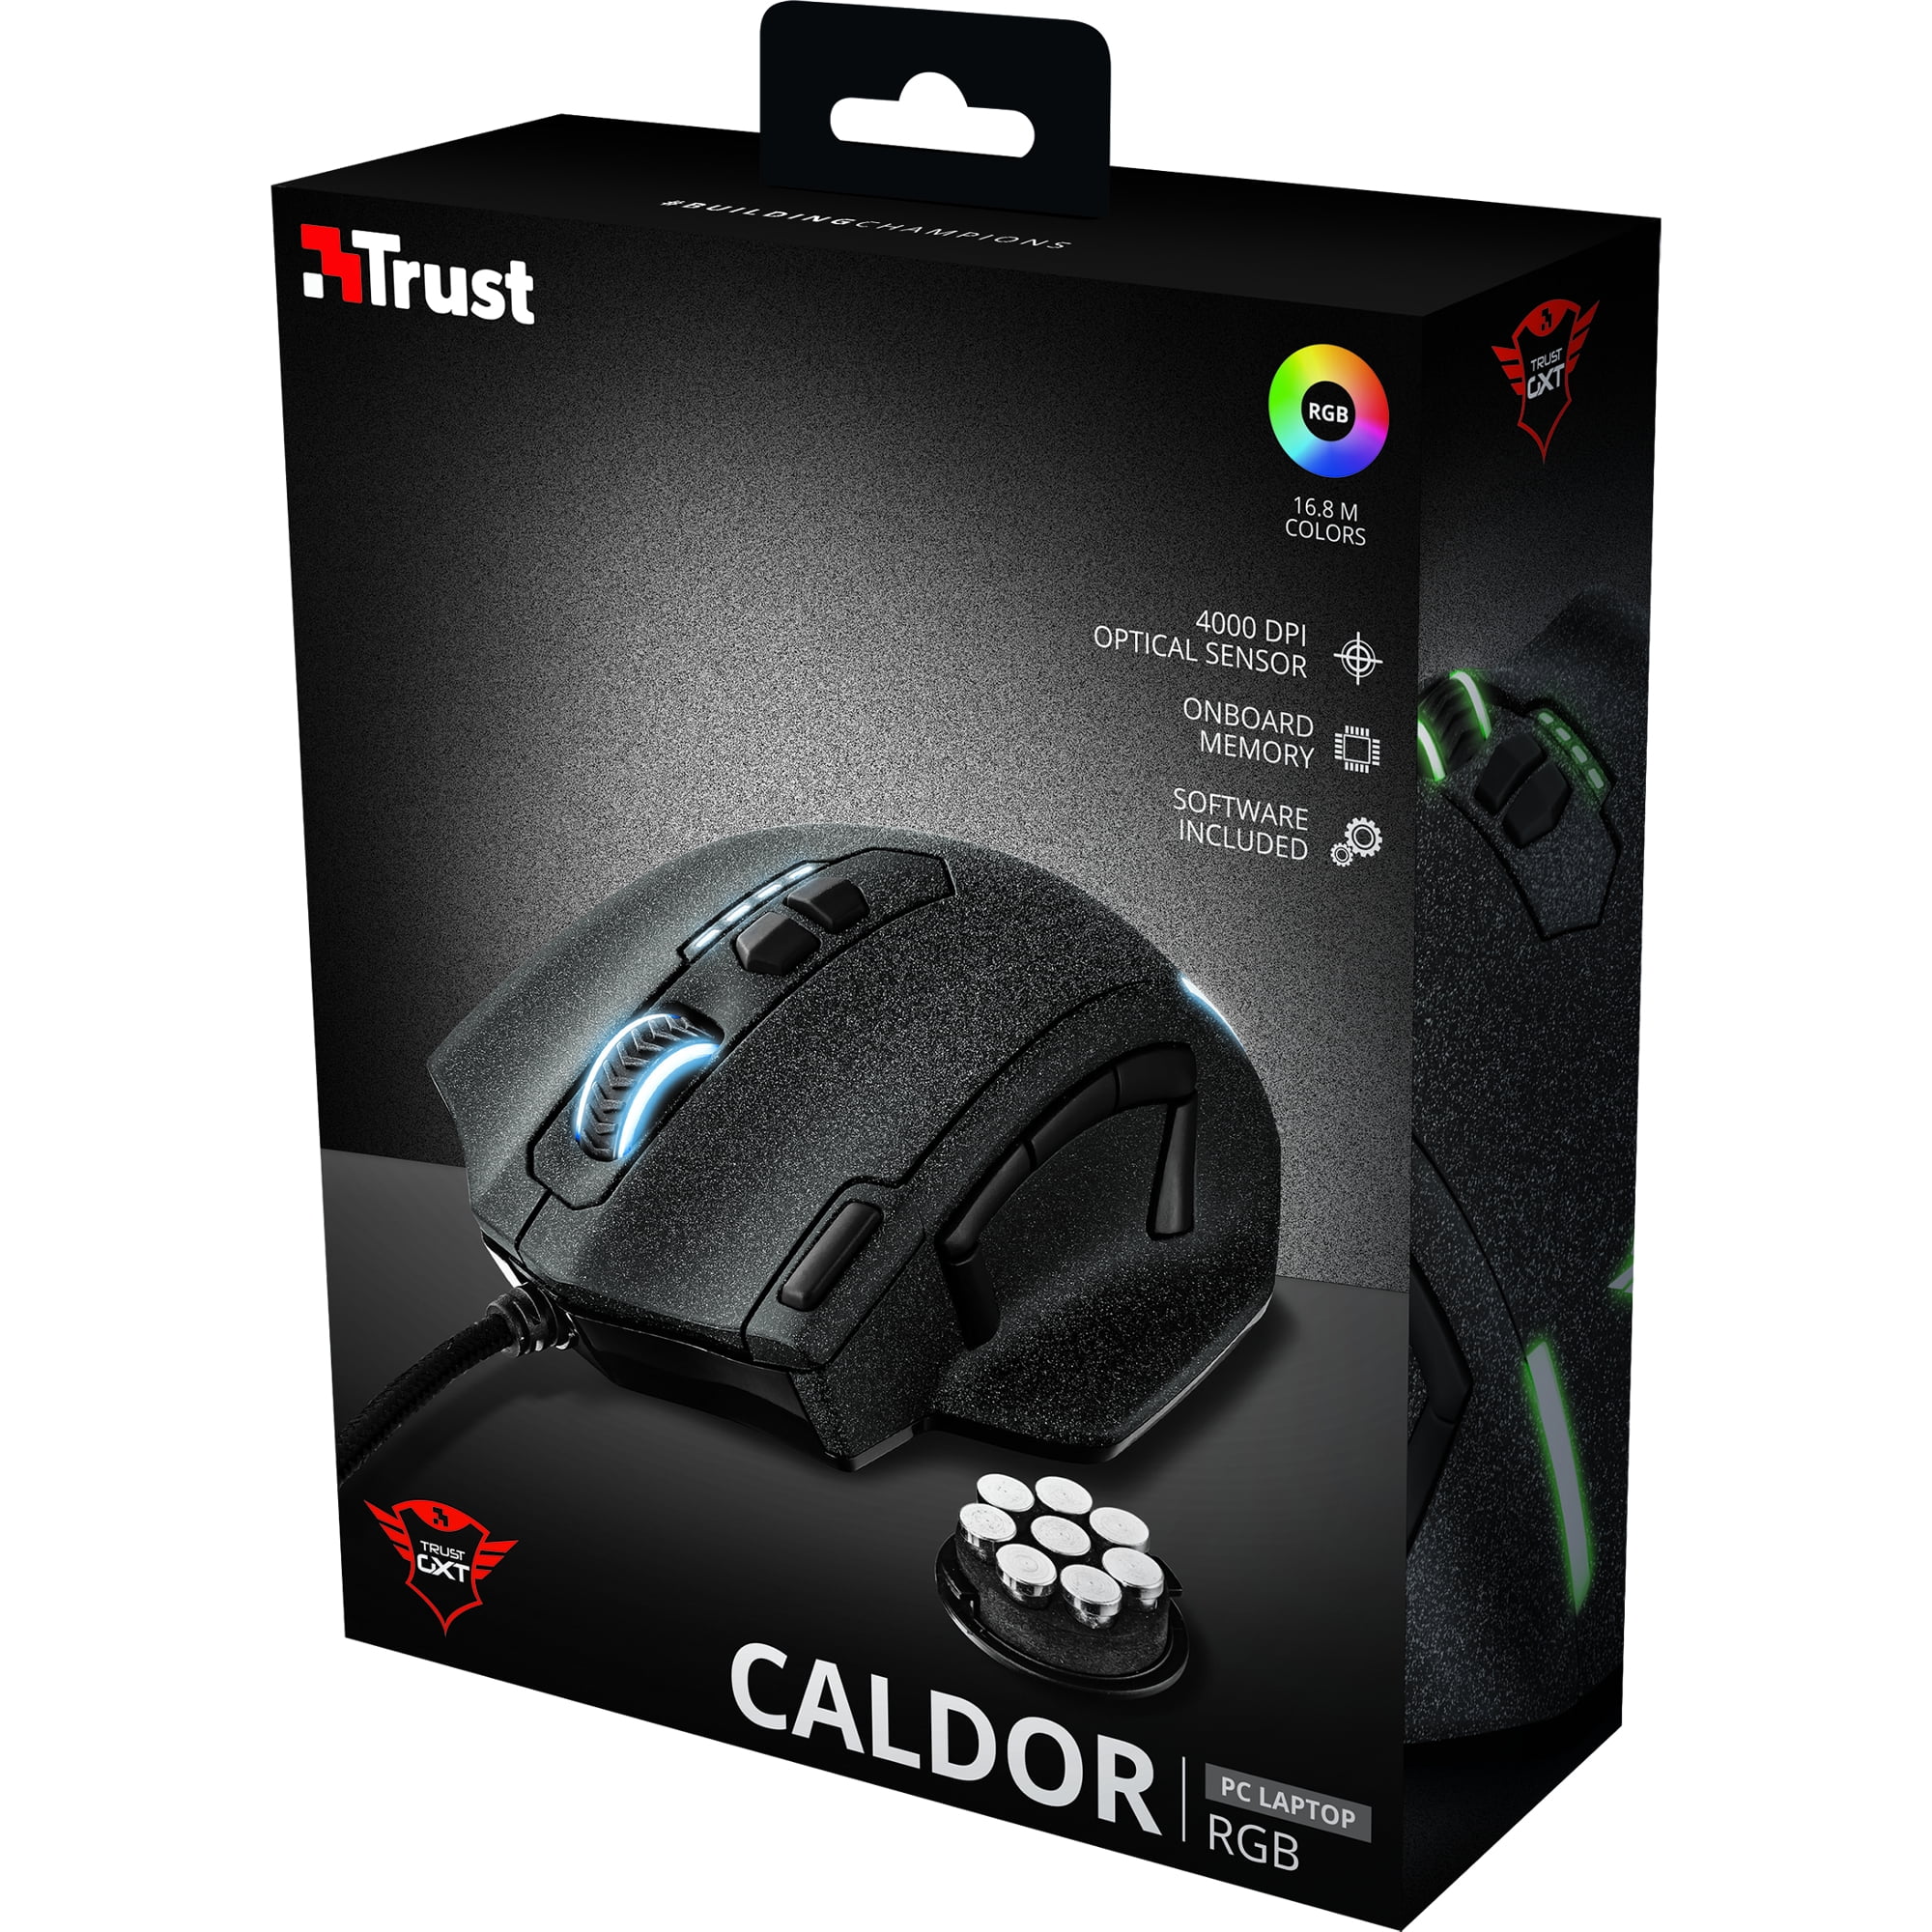 Trust GXT 155 Caldor Gaming Mouse - black, Black 